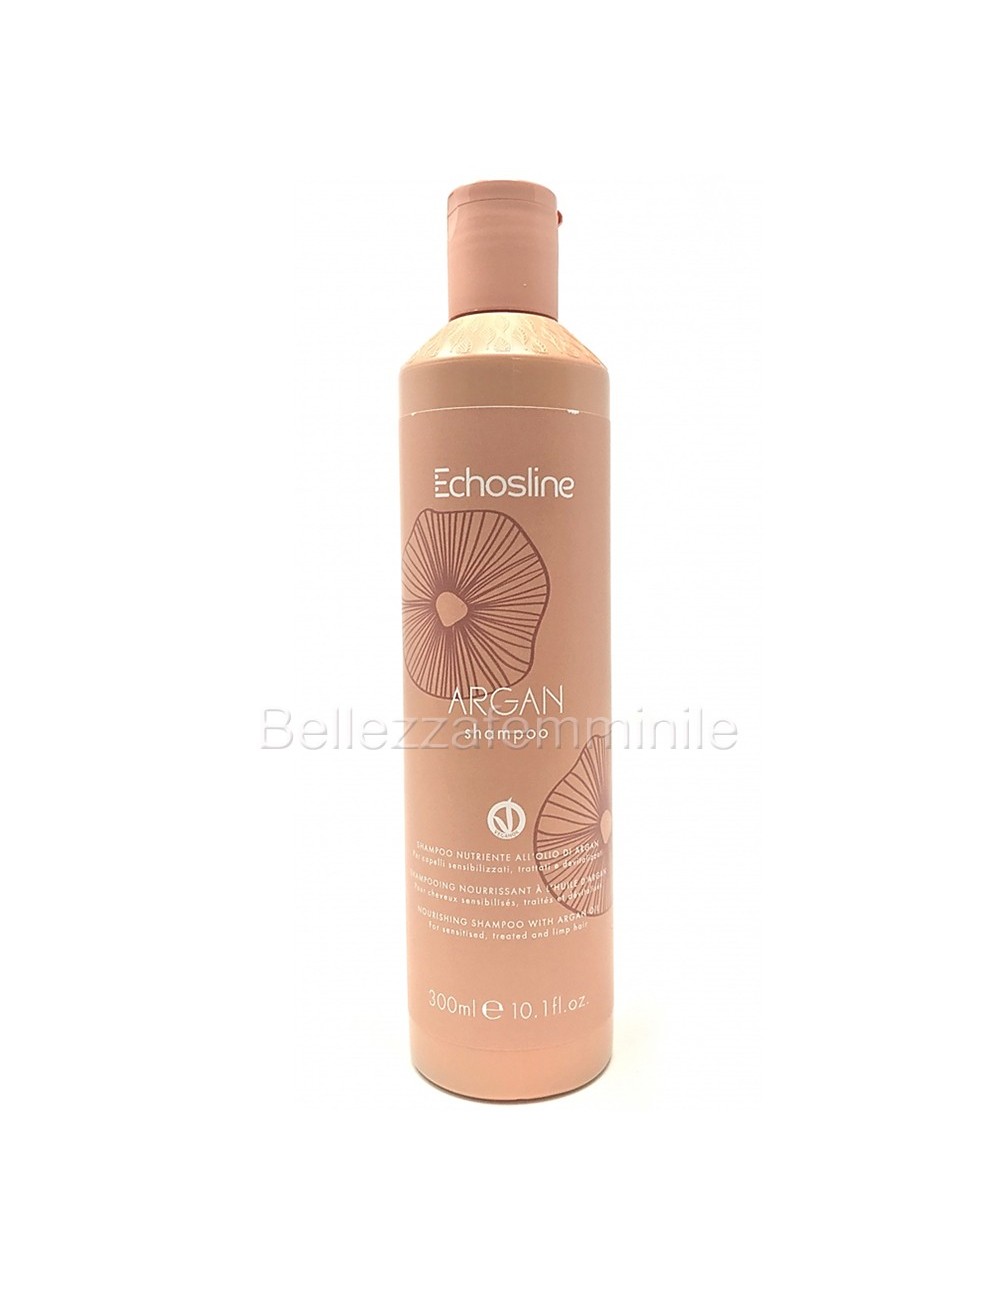 Argan oil hair shampoo 300 ml - Echosline Argan